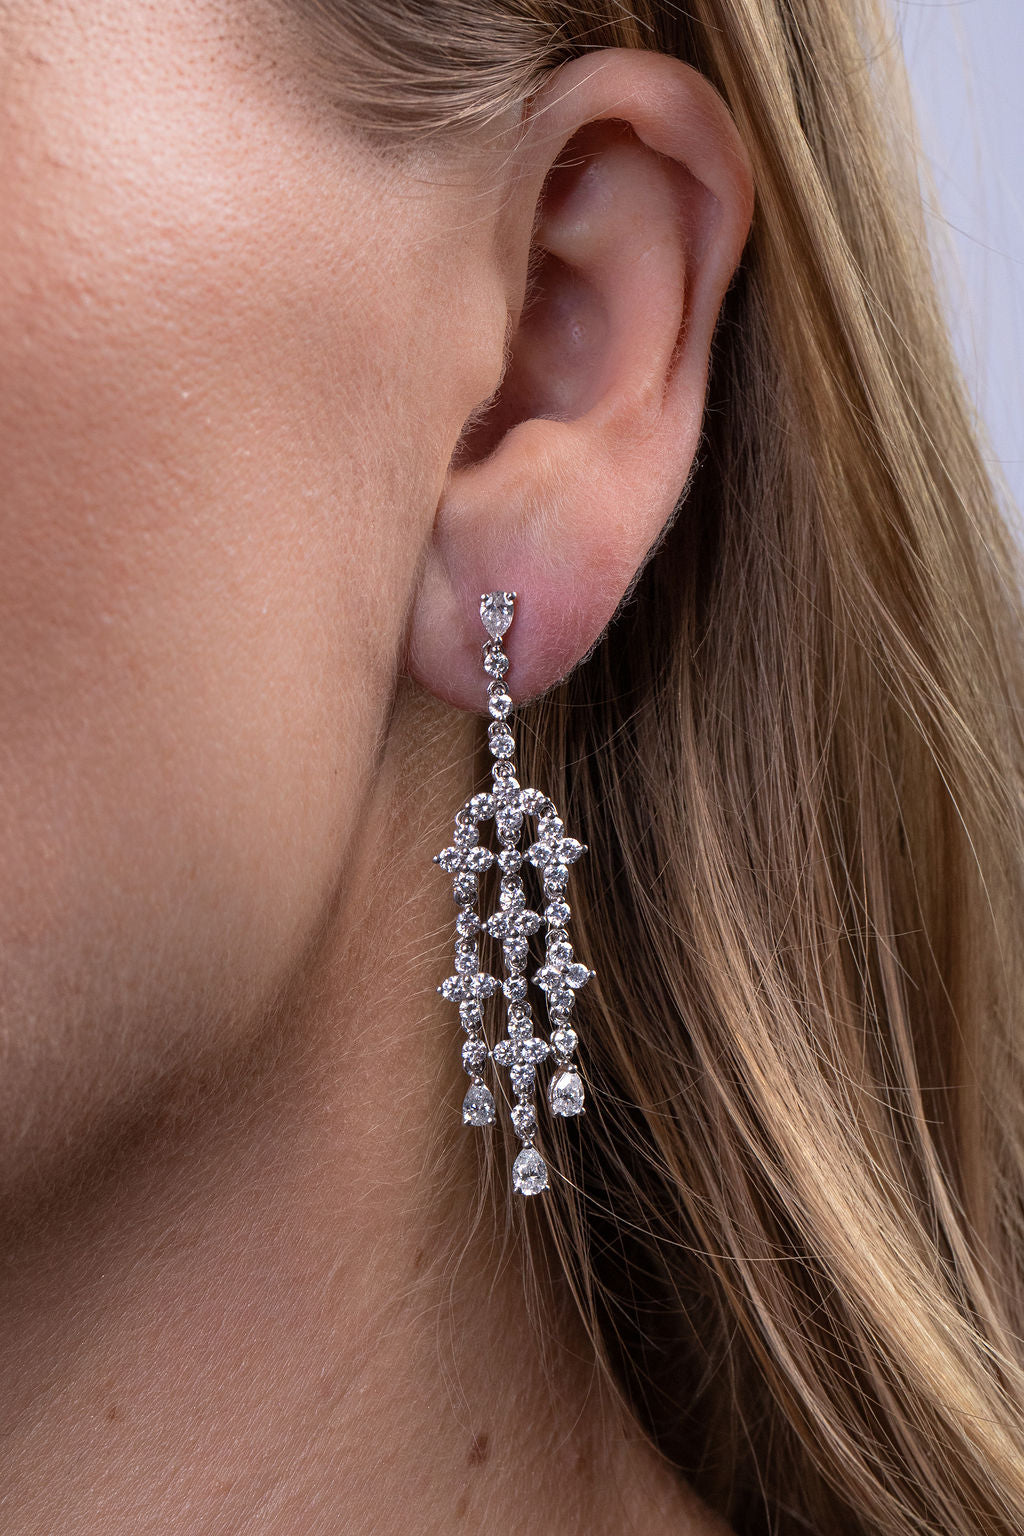 14k White Gold 1 12ct TW Diamond Chandelier Earrings HI SI1SI2   DiamondStudscom